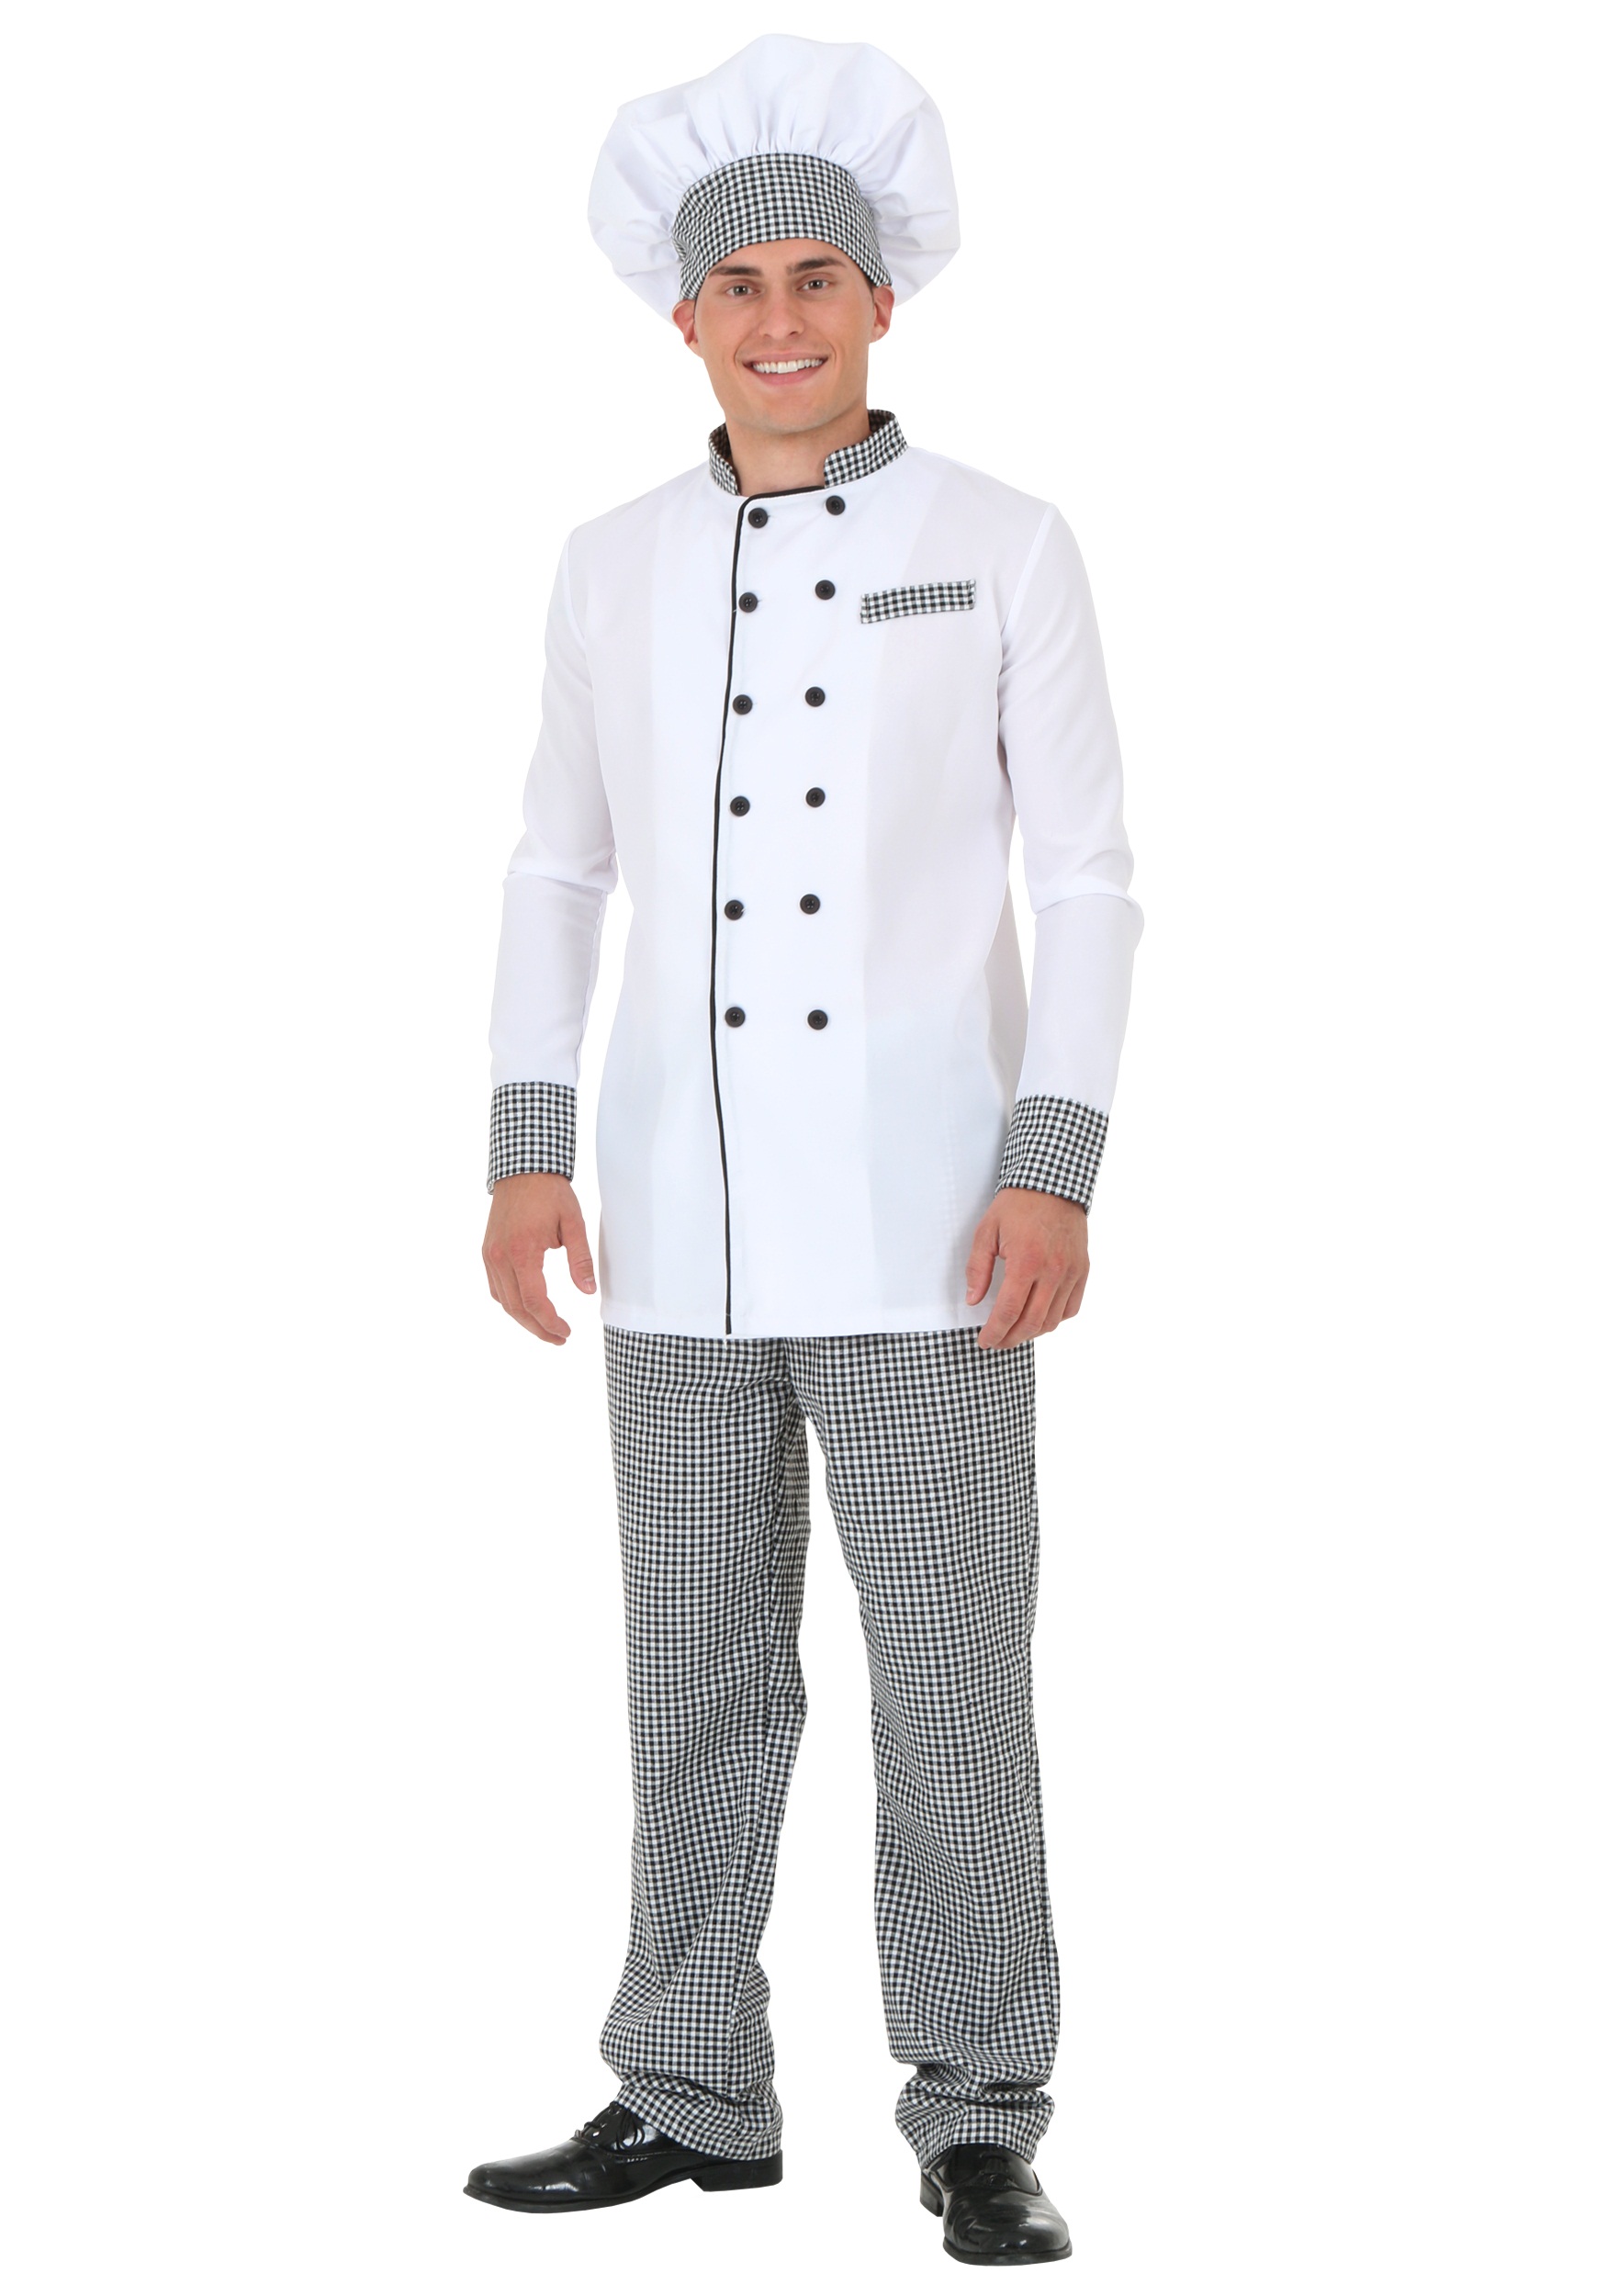 White Chef Jacket Costume For Men